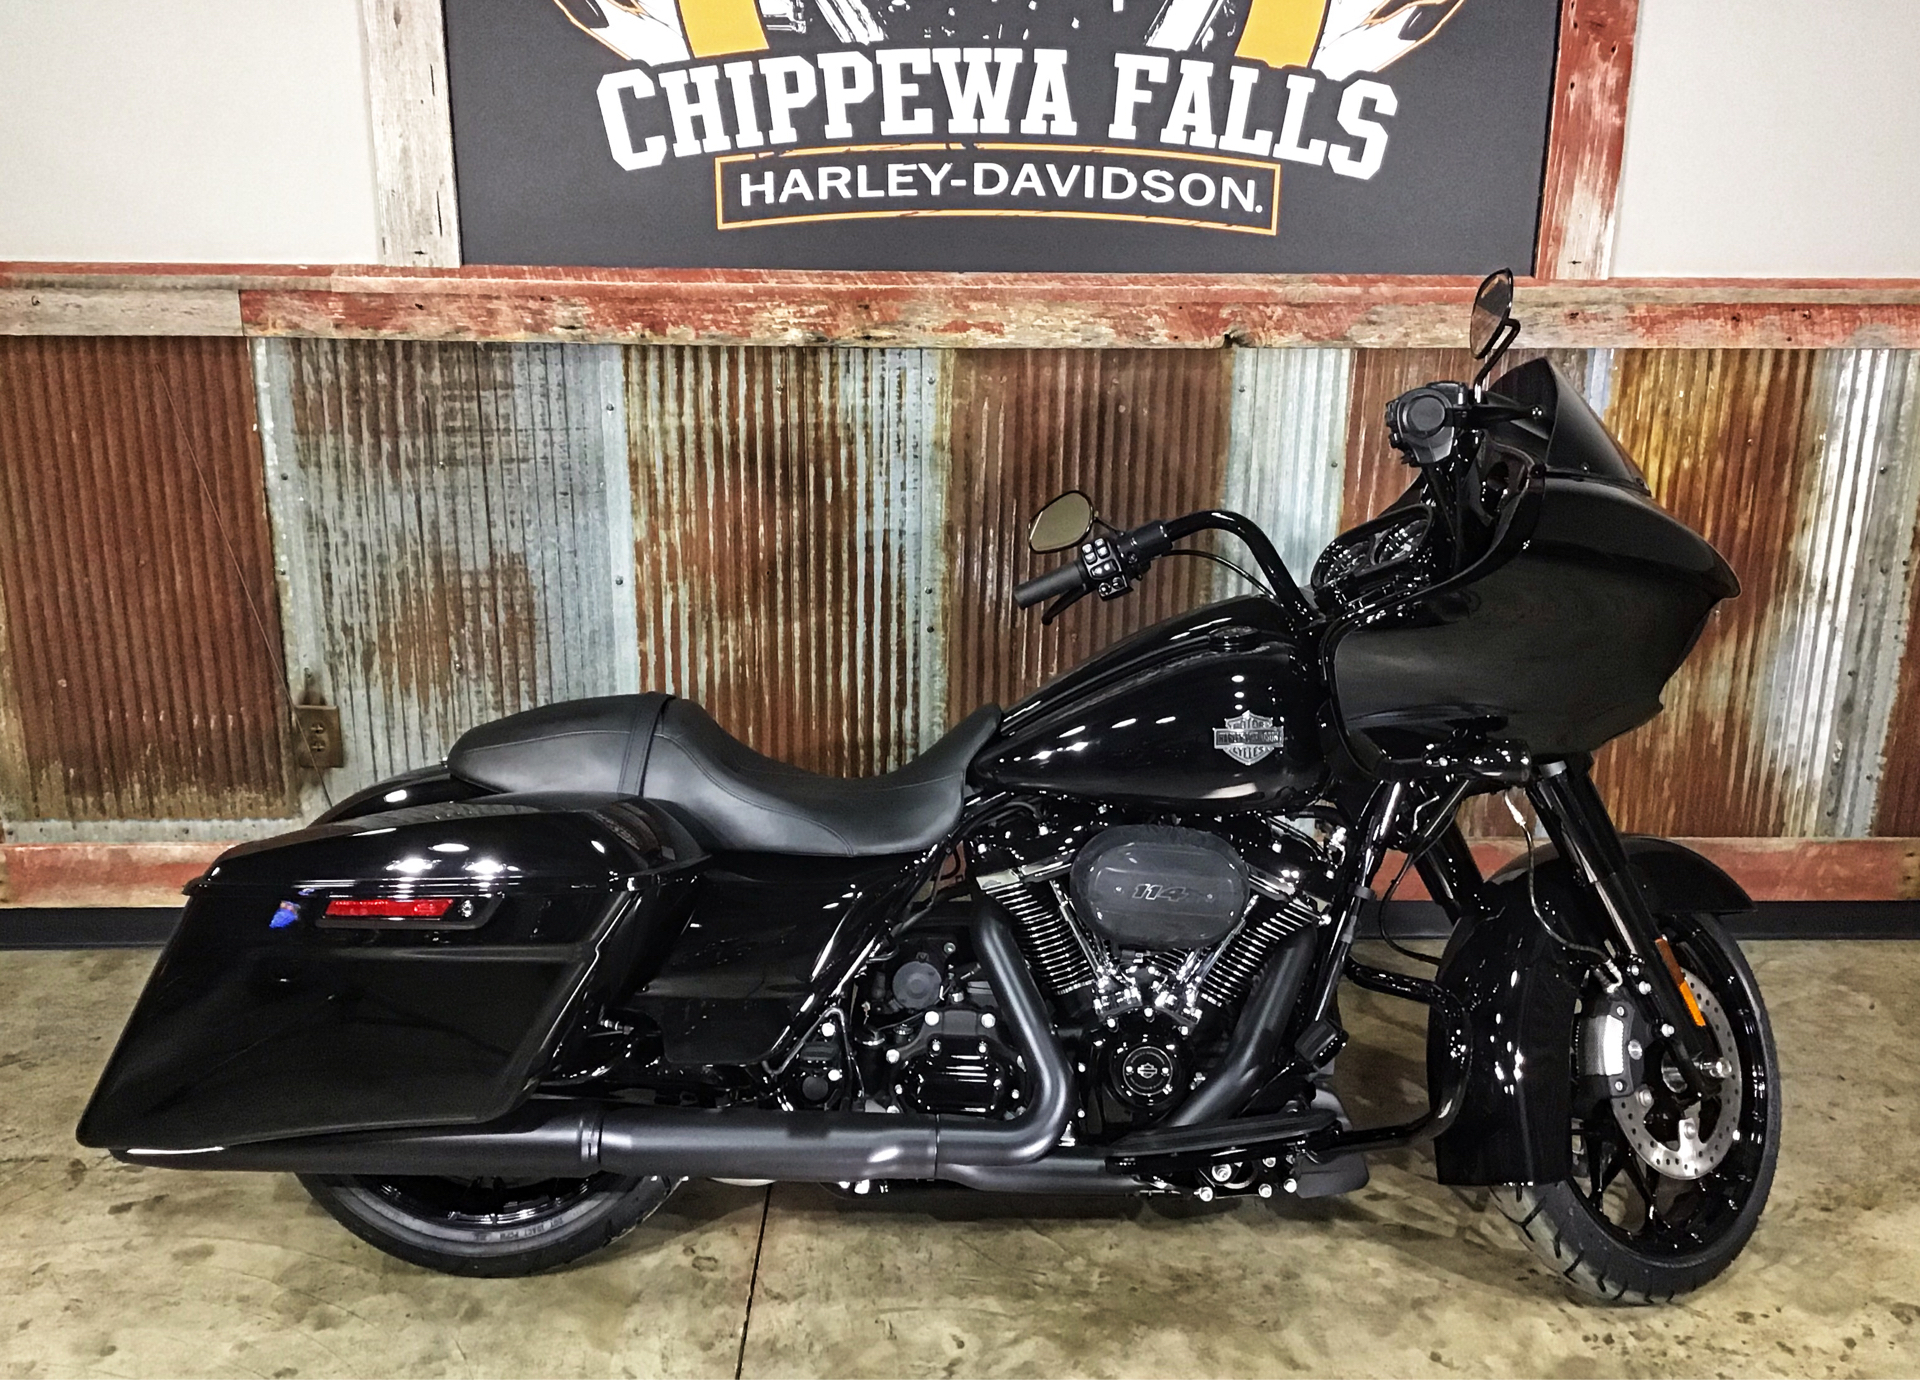 New 2021 Harley Davidson Road Glide Special Vivid Black Black Pearl Option Motorcycles In Chippewa Falls Wi Fl652293